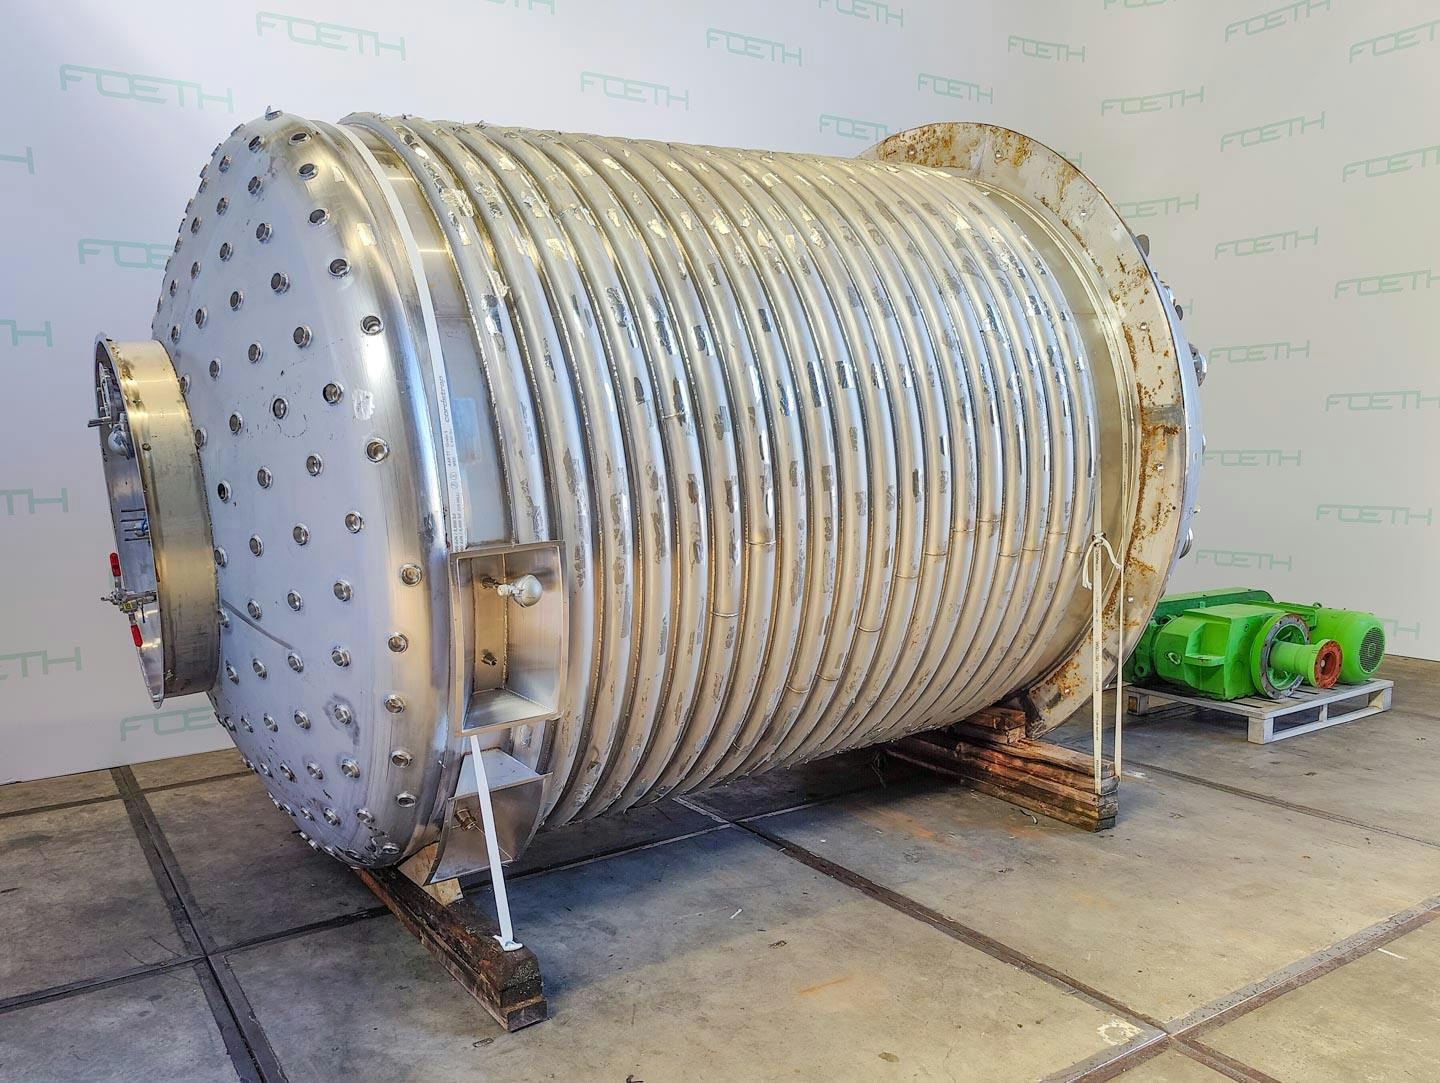 Hinke 13000 Ltr - Reactor de acero inoxidable - image 2